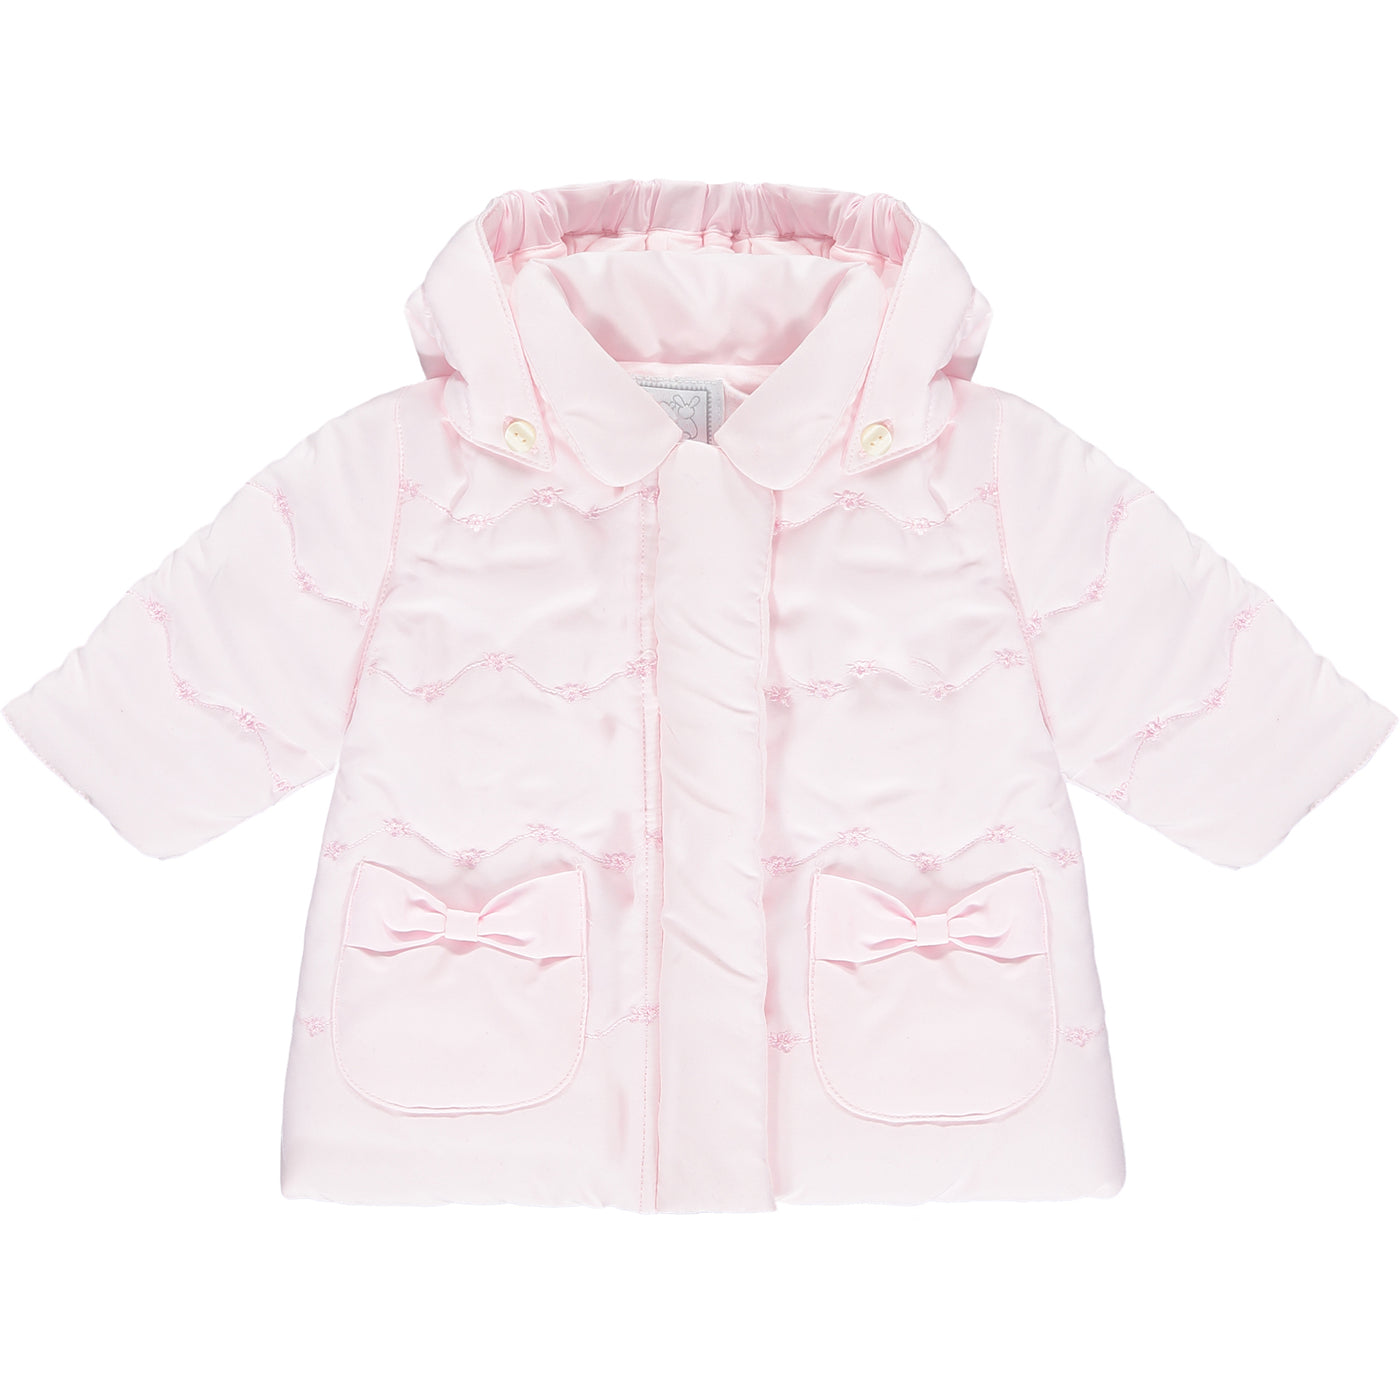 Carly Rosebud Baby Girls Winter Jacket